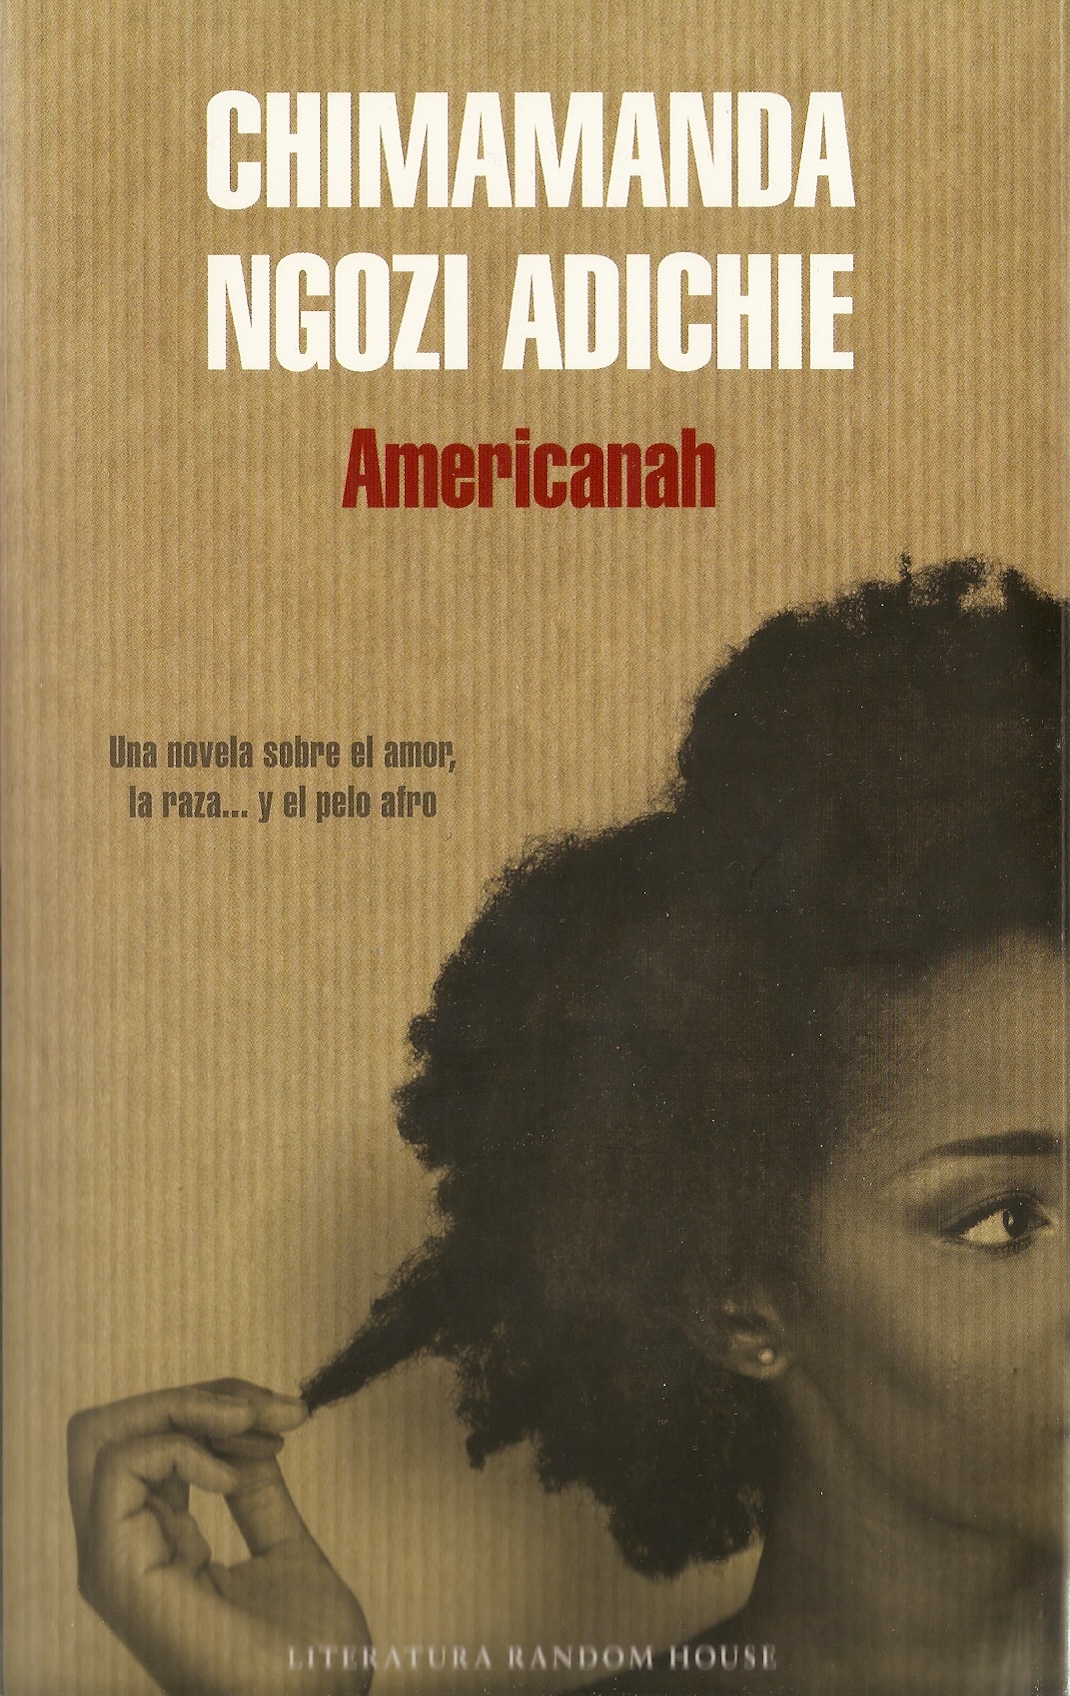 escanear0051 - Americanah (Chimamanda Ngozi Adichie, 2013) - (Audiolibro Voz Humana)